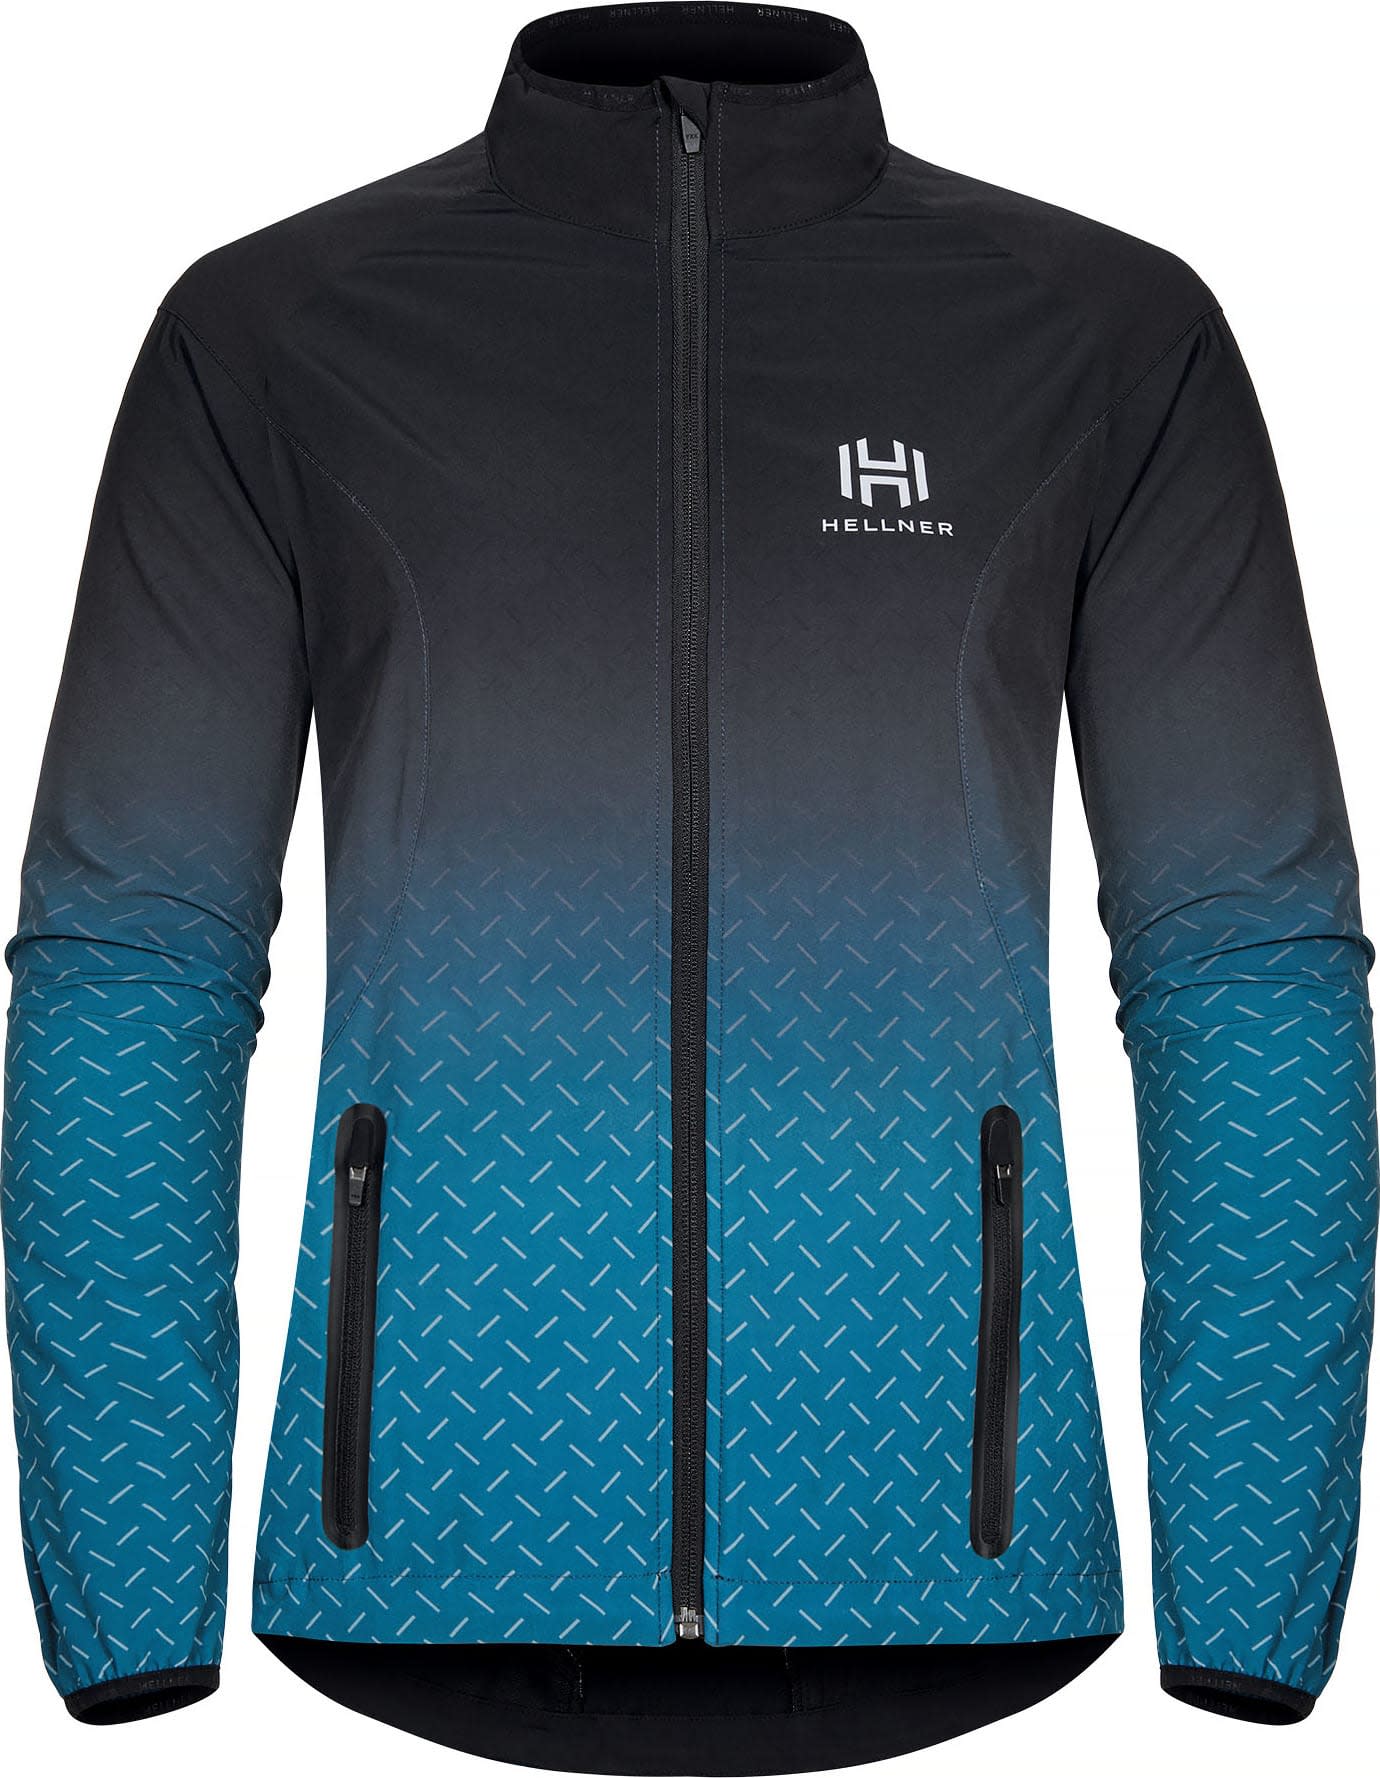 Hellner Harrå Hybrid Jacket Women Blue Coral